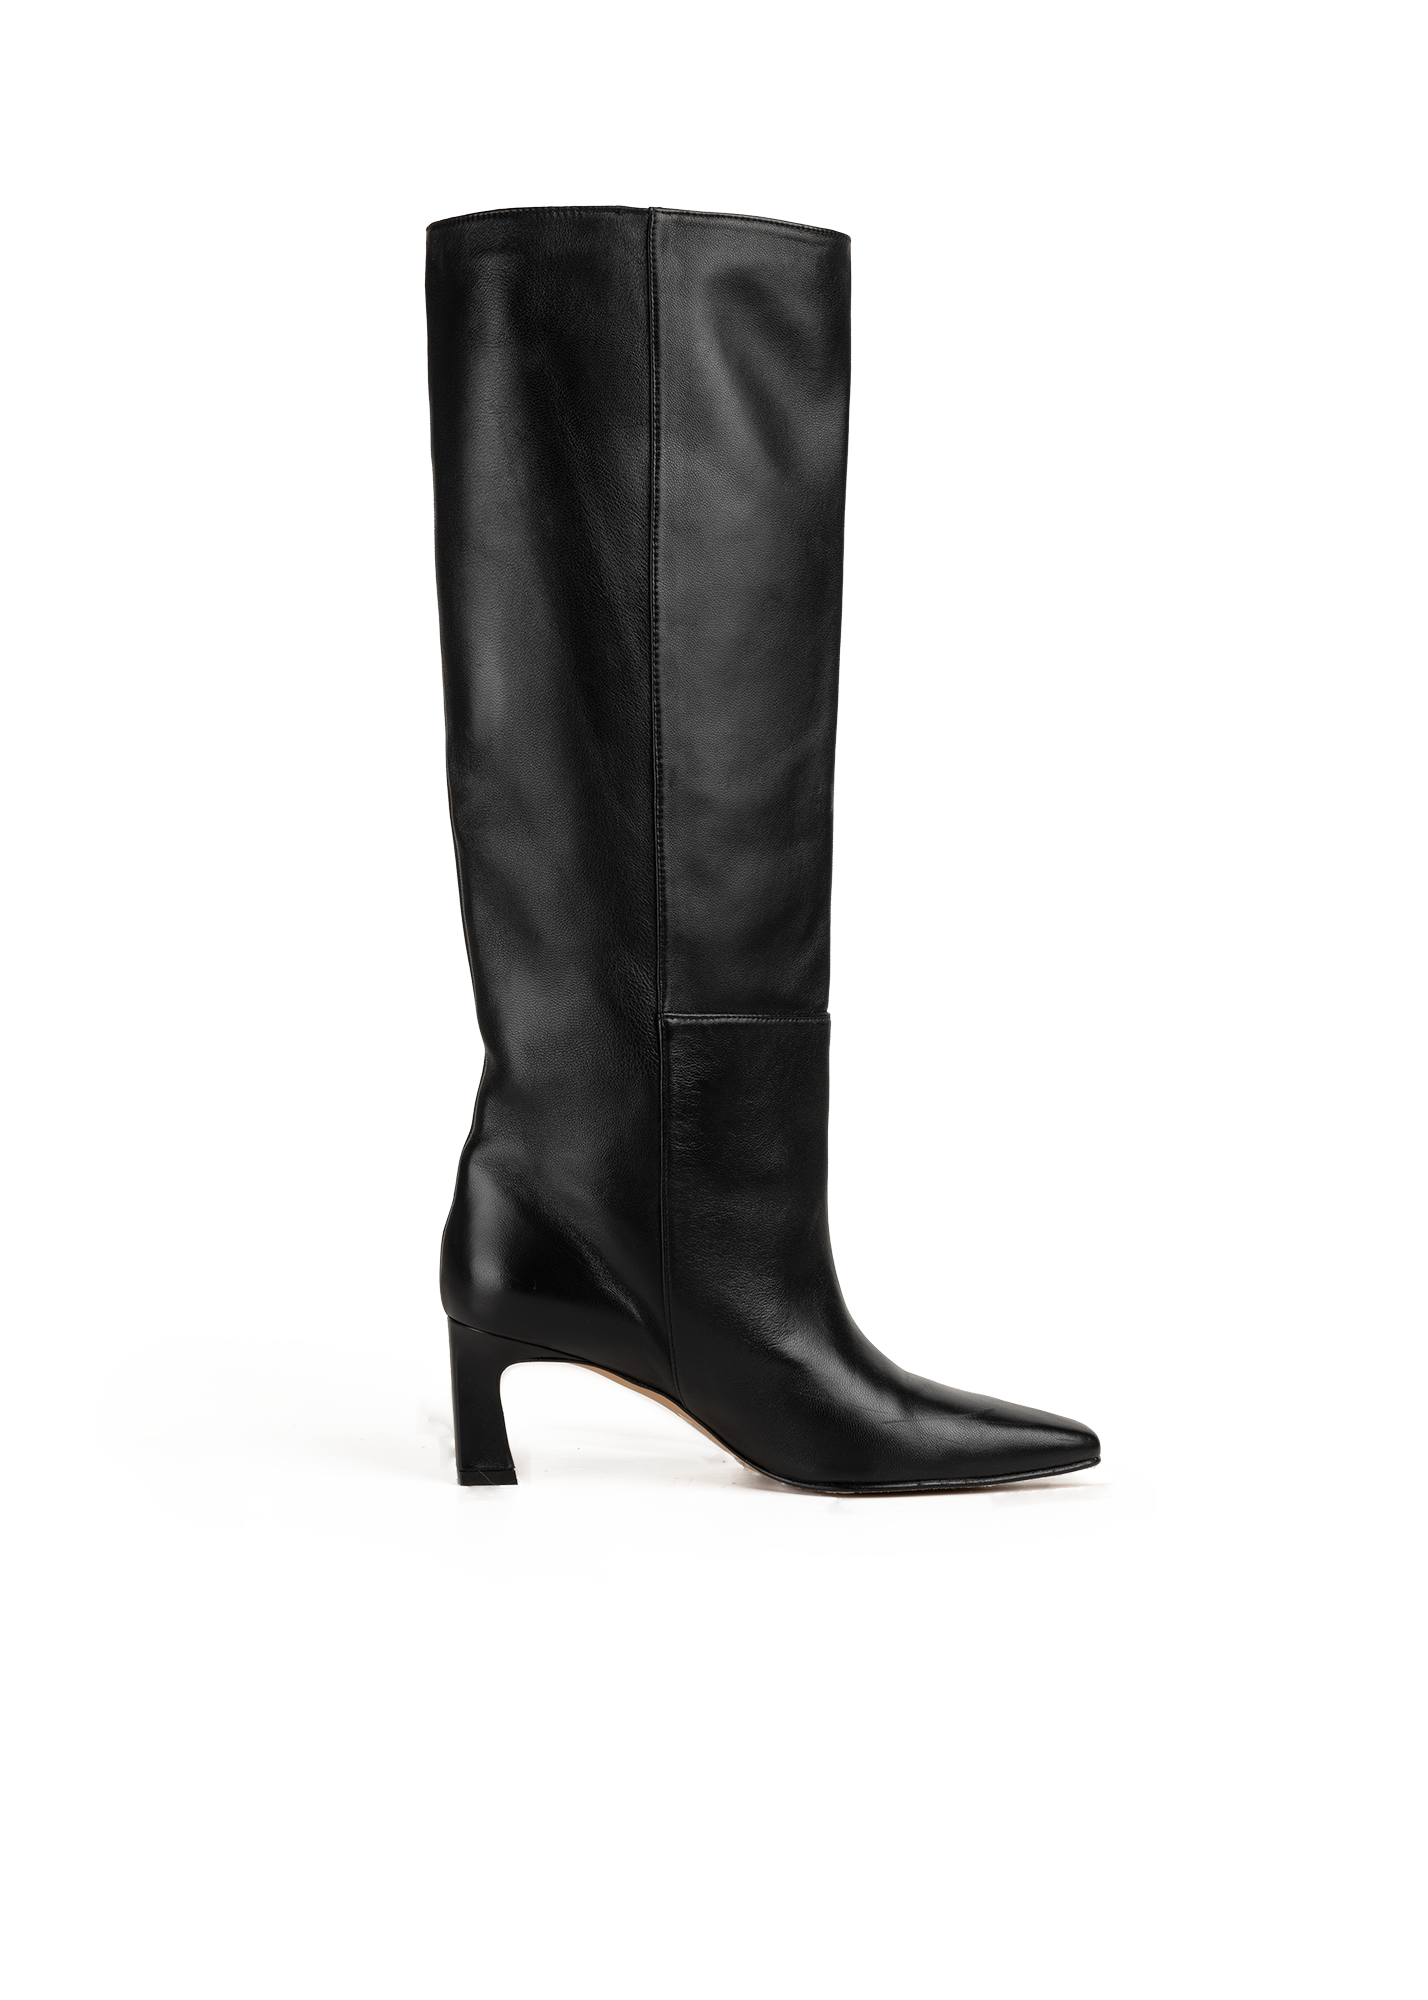 Black high heeled boots